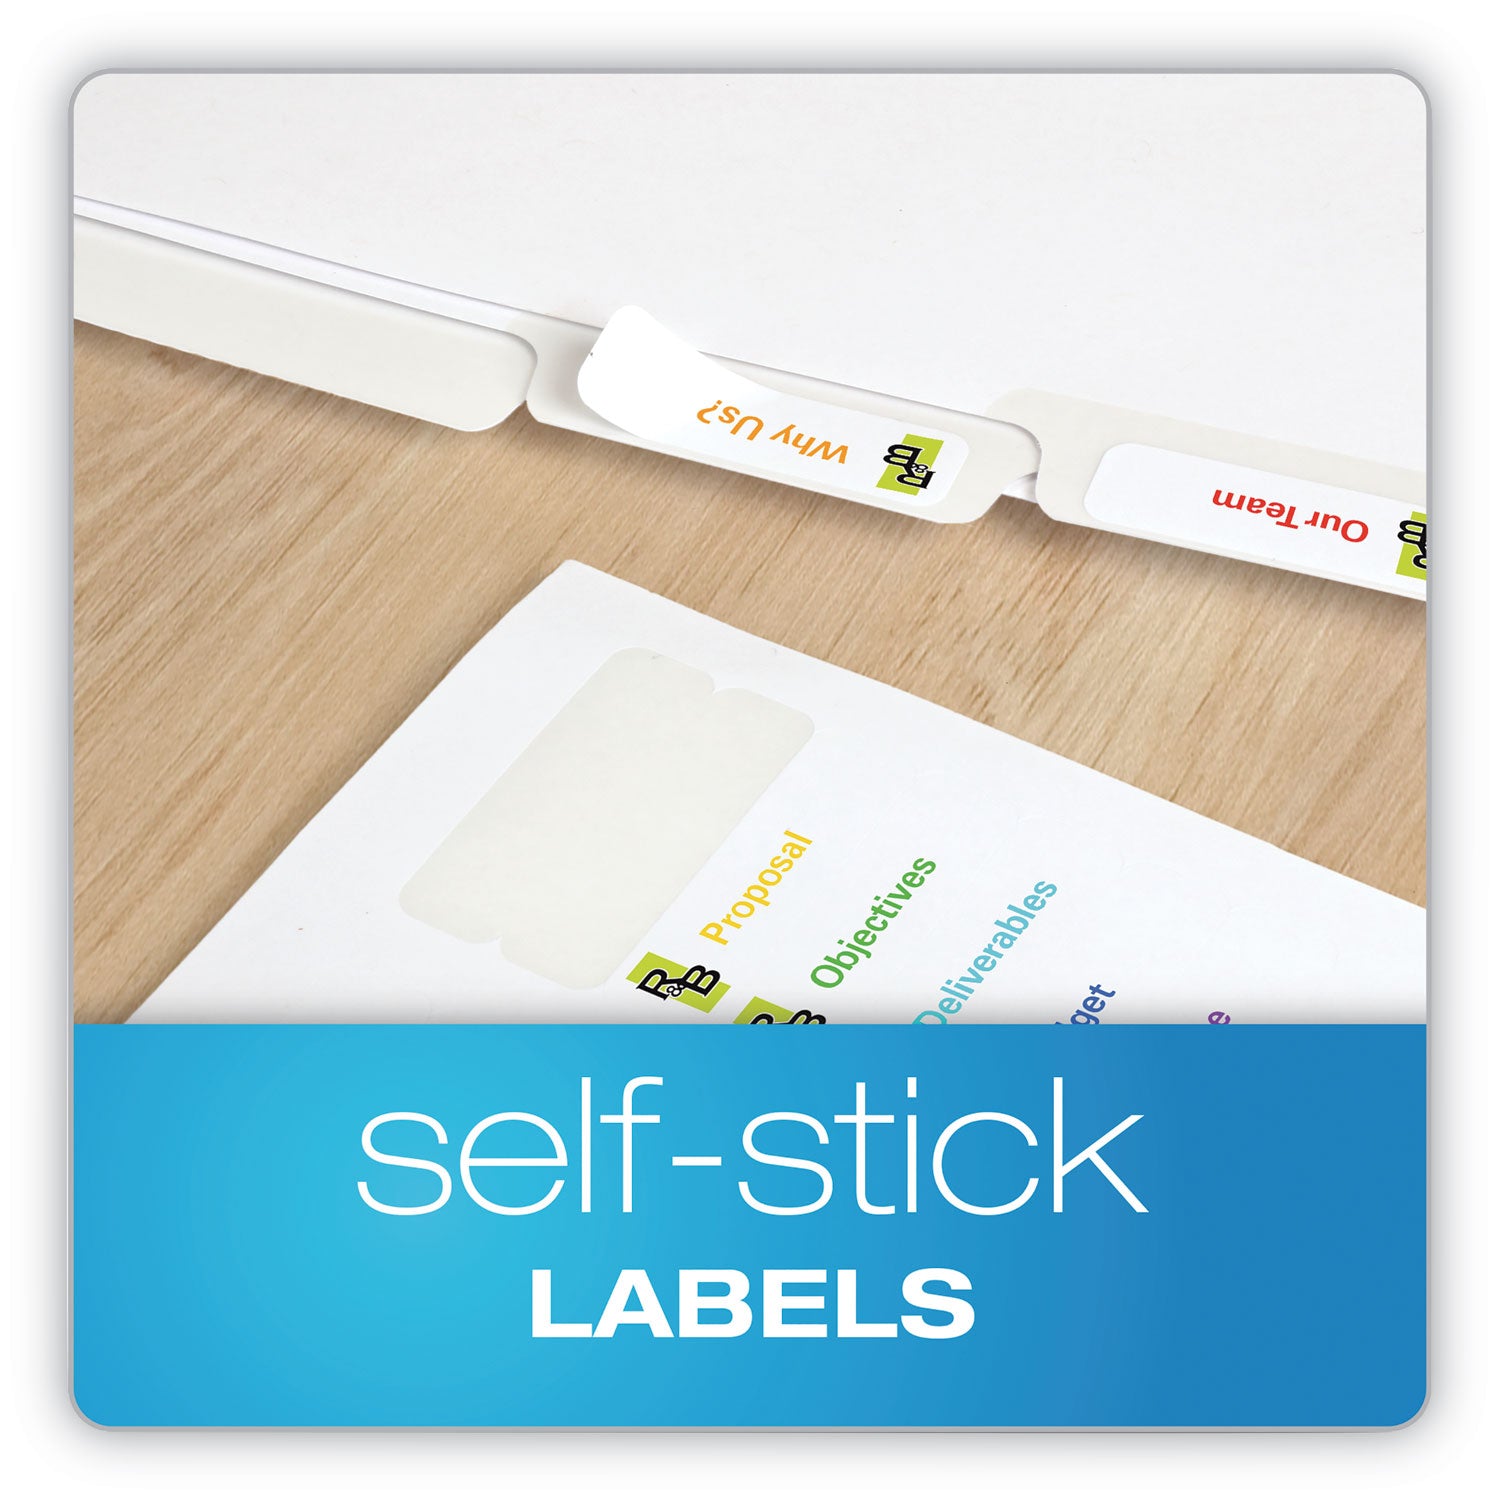 Custom Label Tab Dividers with Self-Adhesive Tab Labels, 5-Tab, 11 x 8.5, White, 25 Sets - 